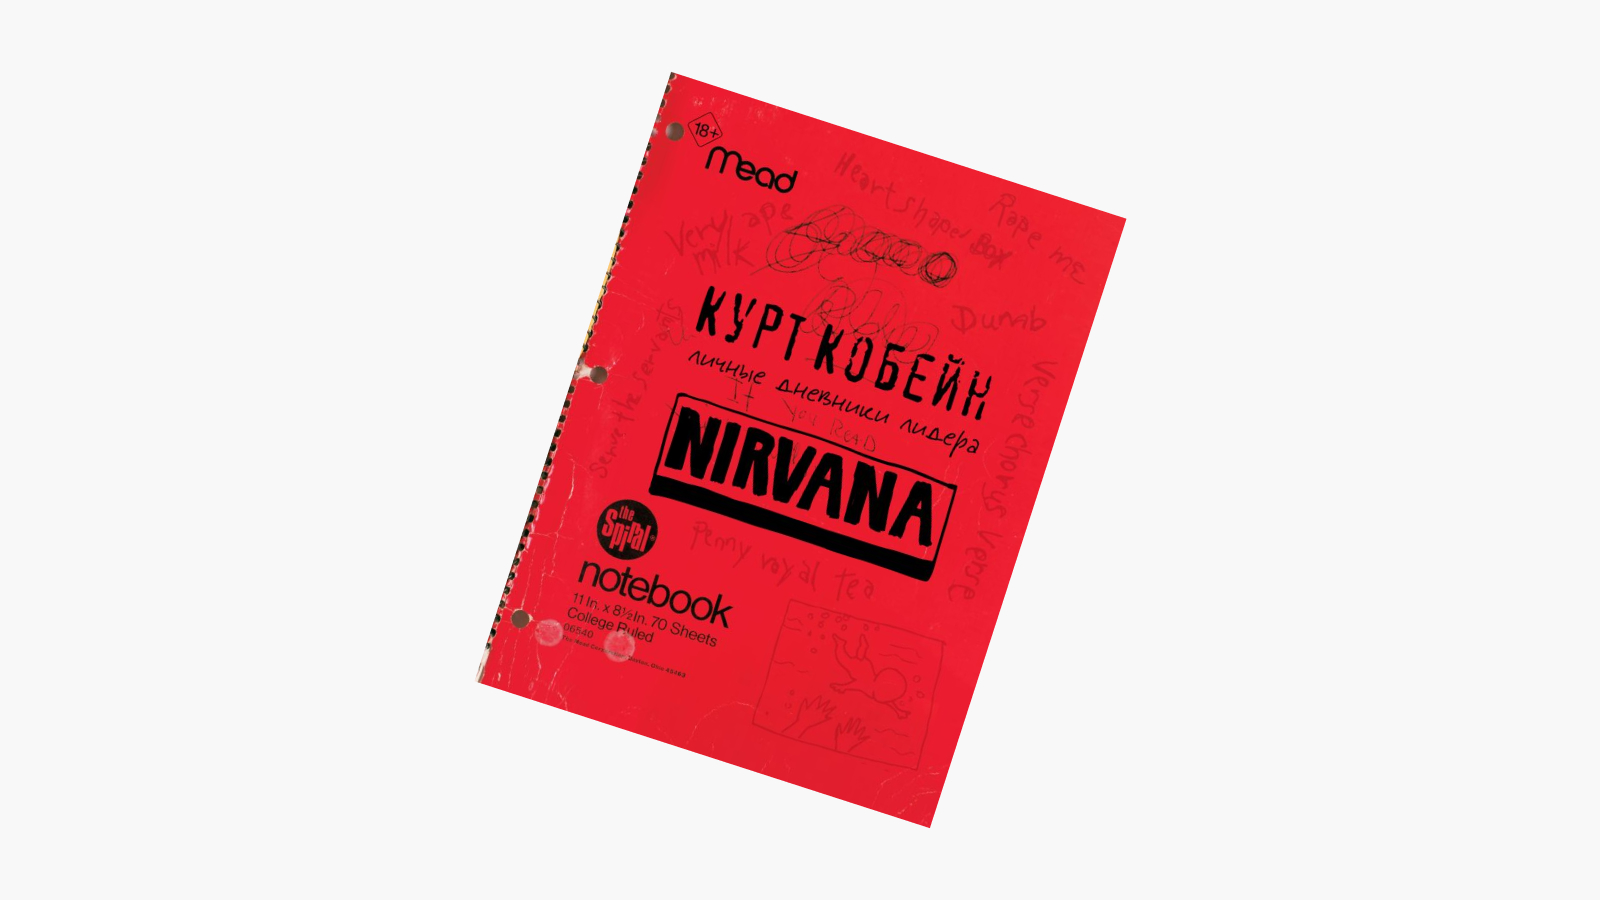 <p>Обложка книги&nbsp;&laquo;Курт Кобейн. Личные дневники лидера Nirvana&raquo;</p>